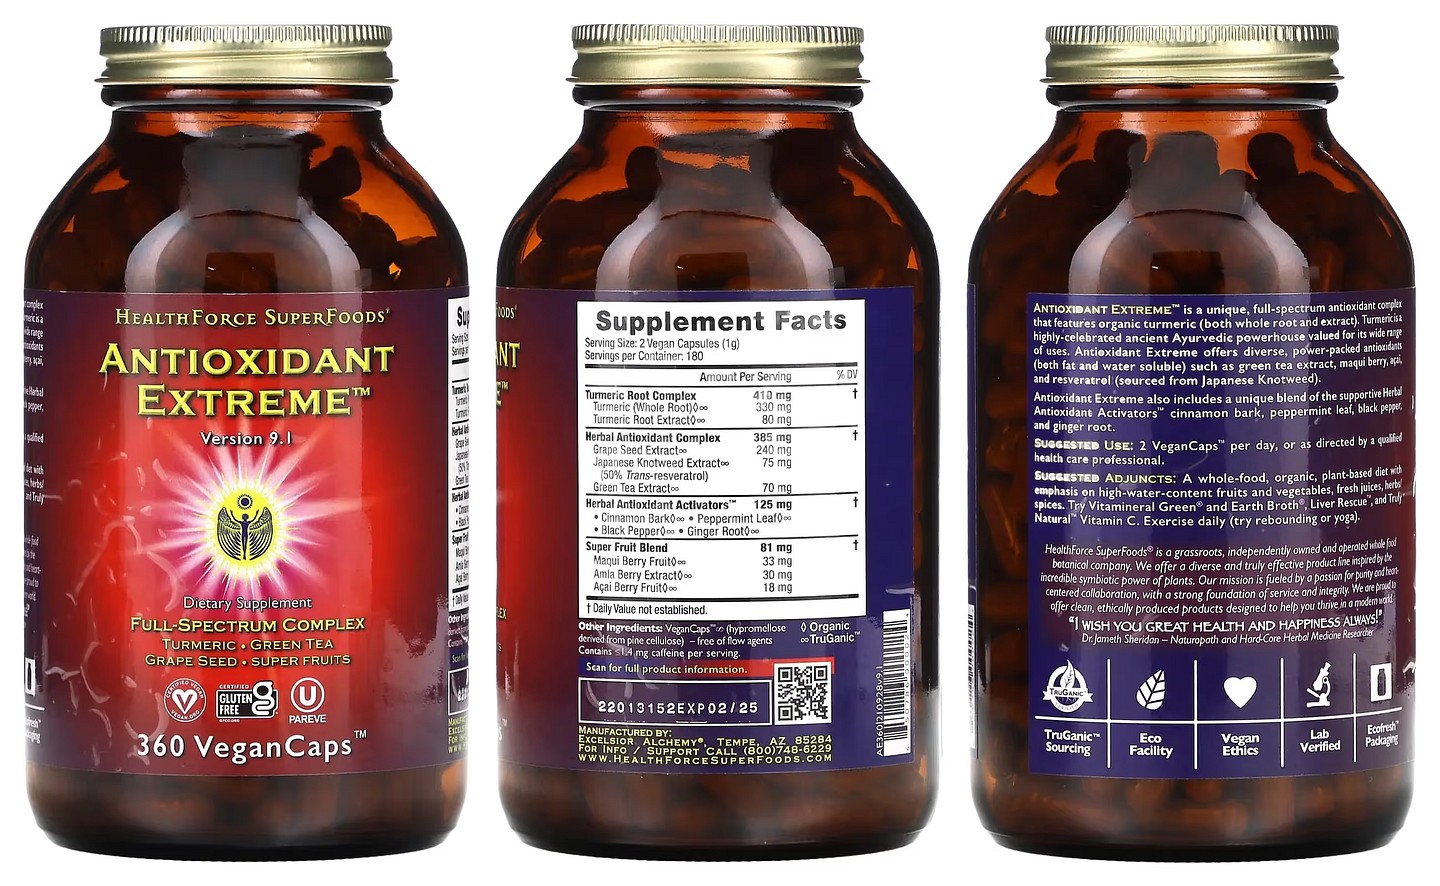 HealthForce Superfoods, Antioxidant Extreme packaging